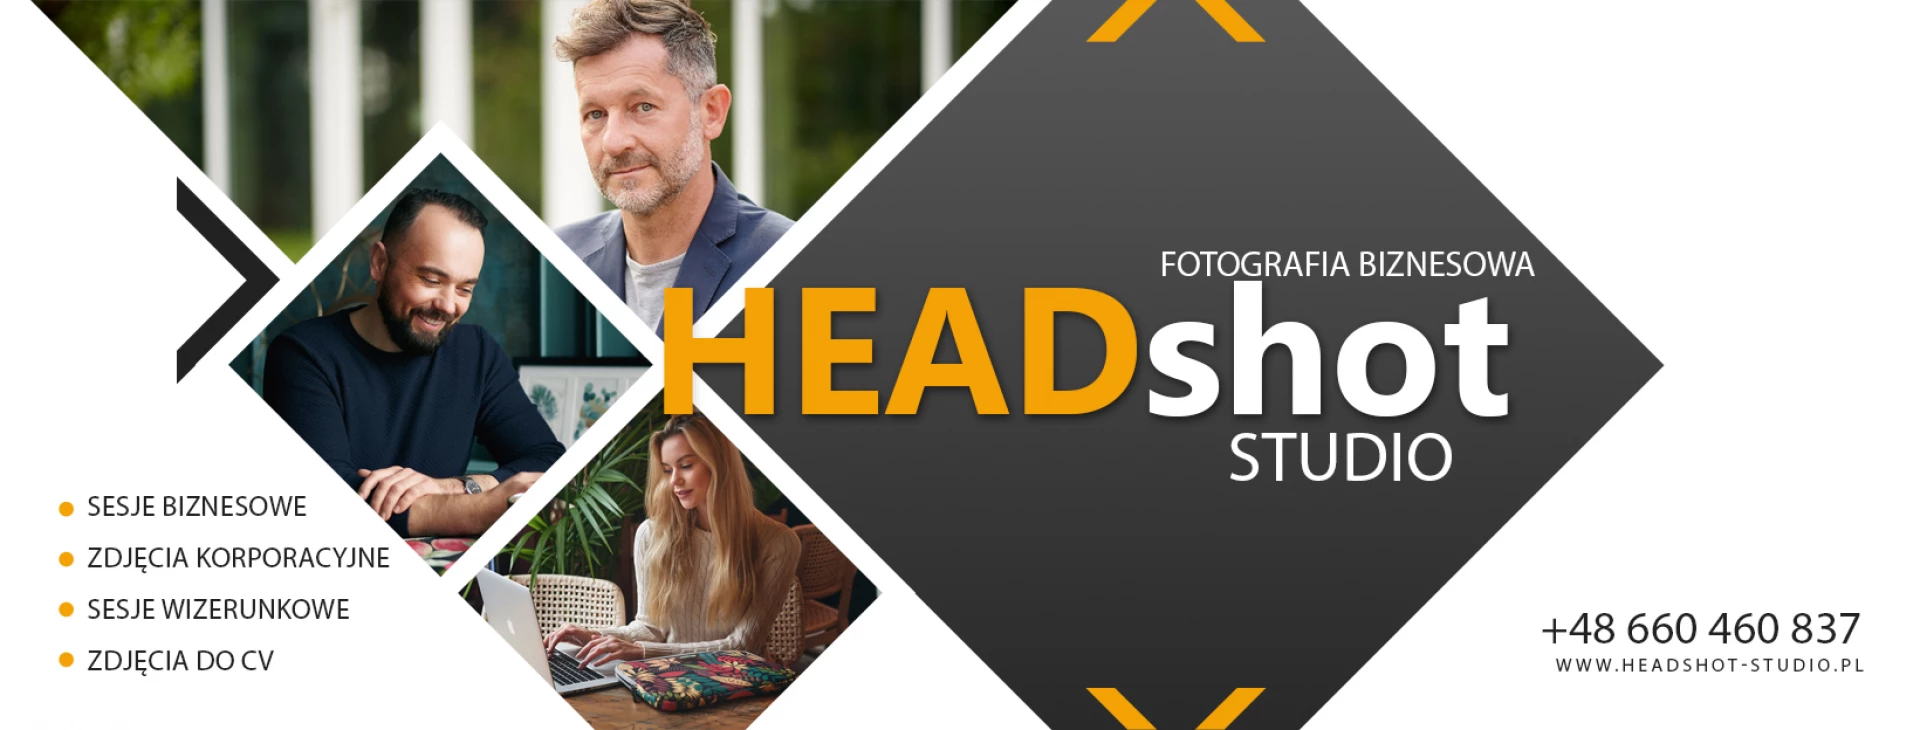 portfolio zdjecia znany fotograf headshot-studio-fotografia-biznesowa